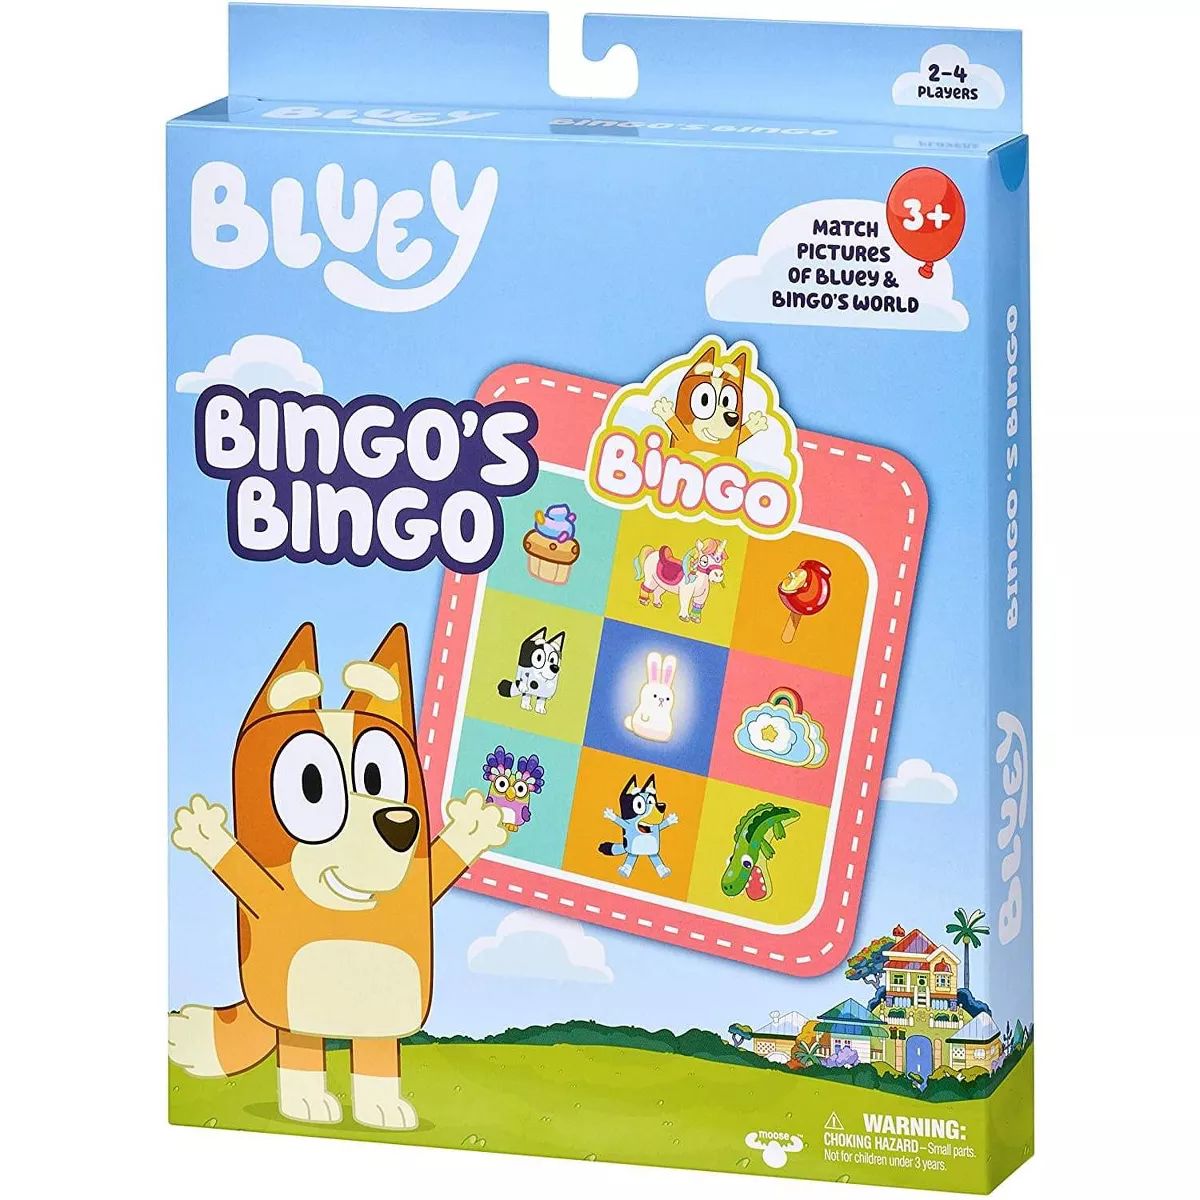 Moose Toys Bluey Bingo's Bingo Card Game | For 2-4 Players | Target